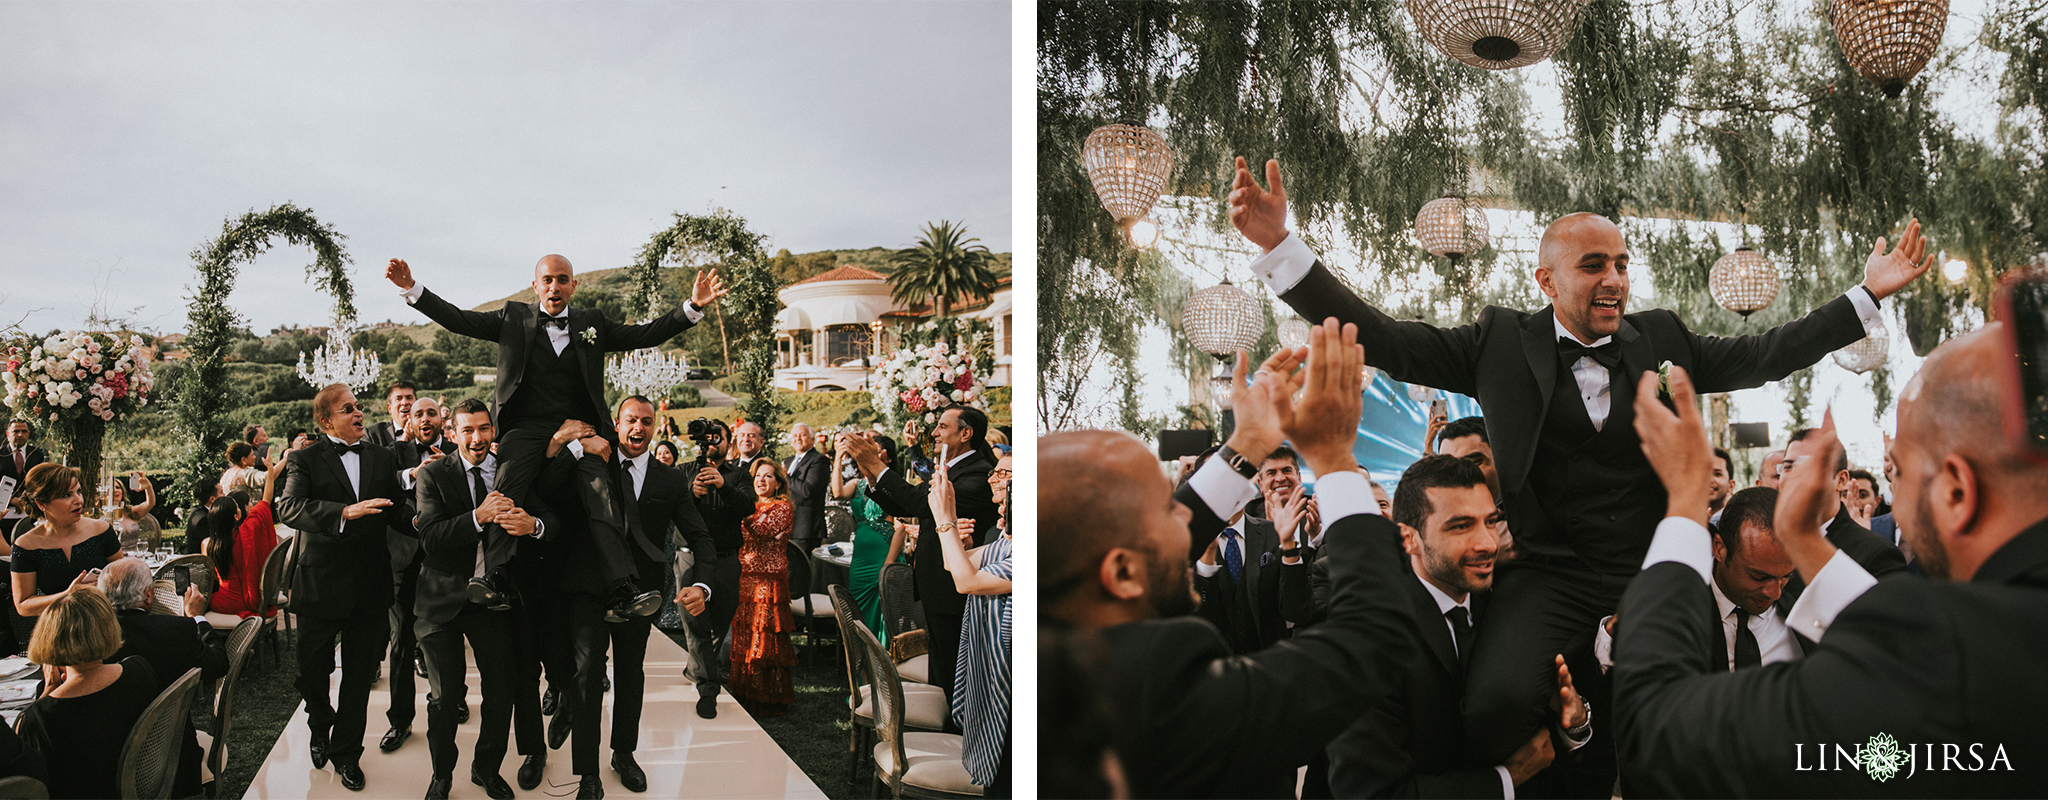 39 Pelican Hill Resort Orange County Arab Wedding Photography